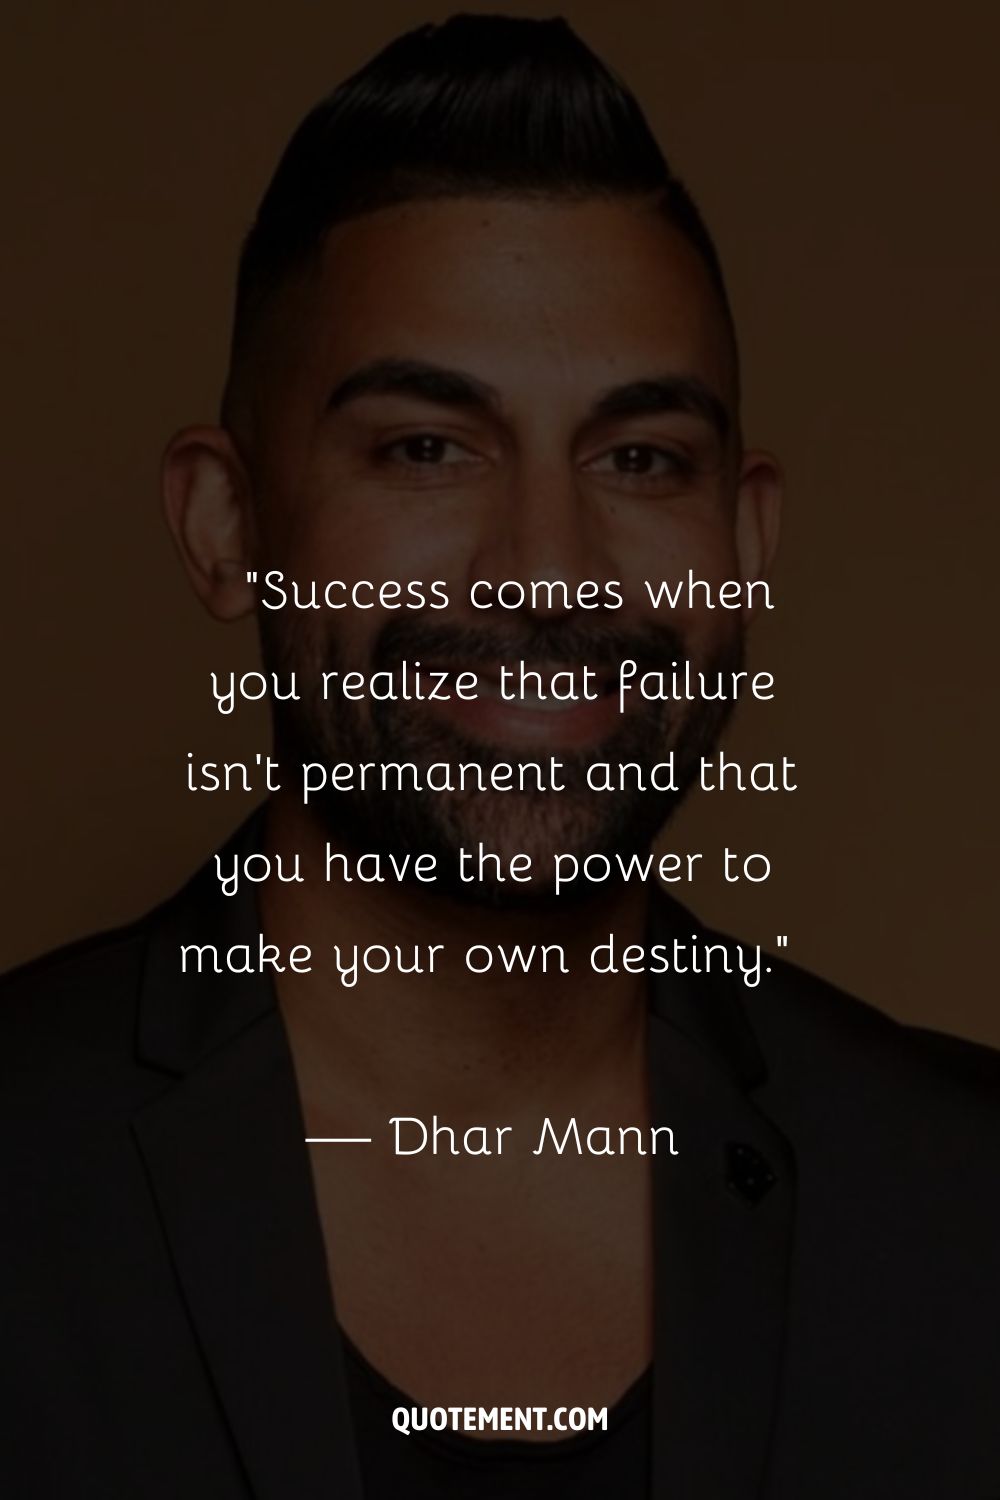 Dhar Man's portrait in a black shirt
